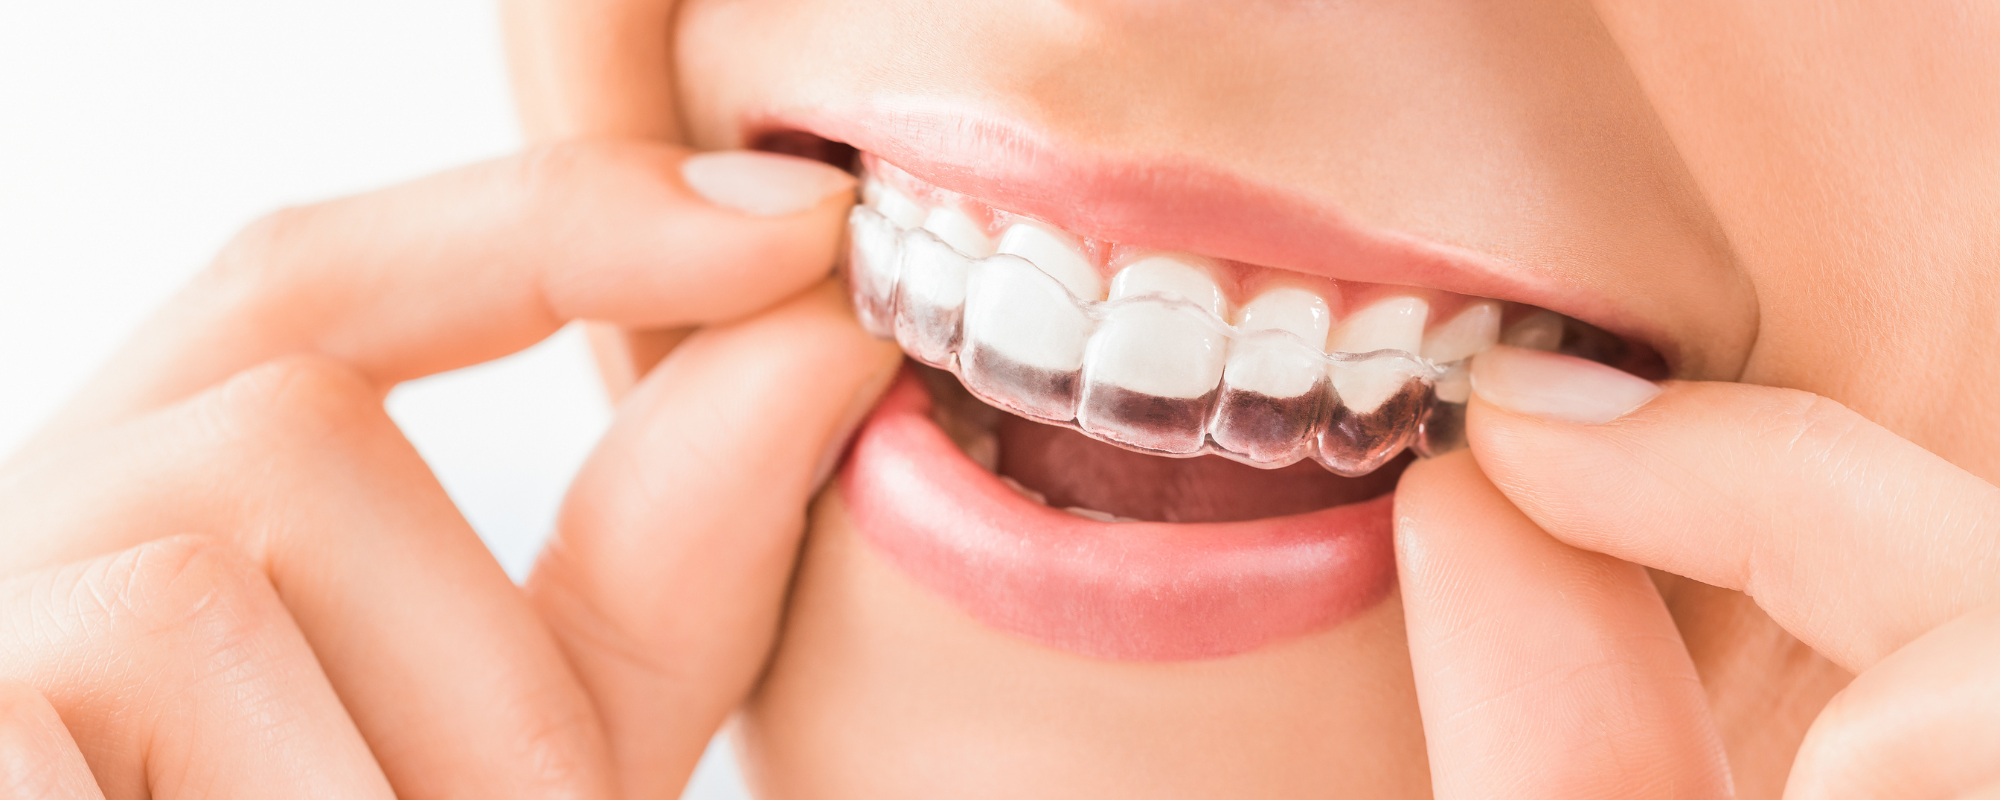 Clear Aligner Treatment Orthodontics Park Dental Specialists